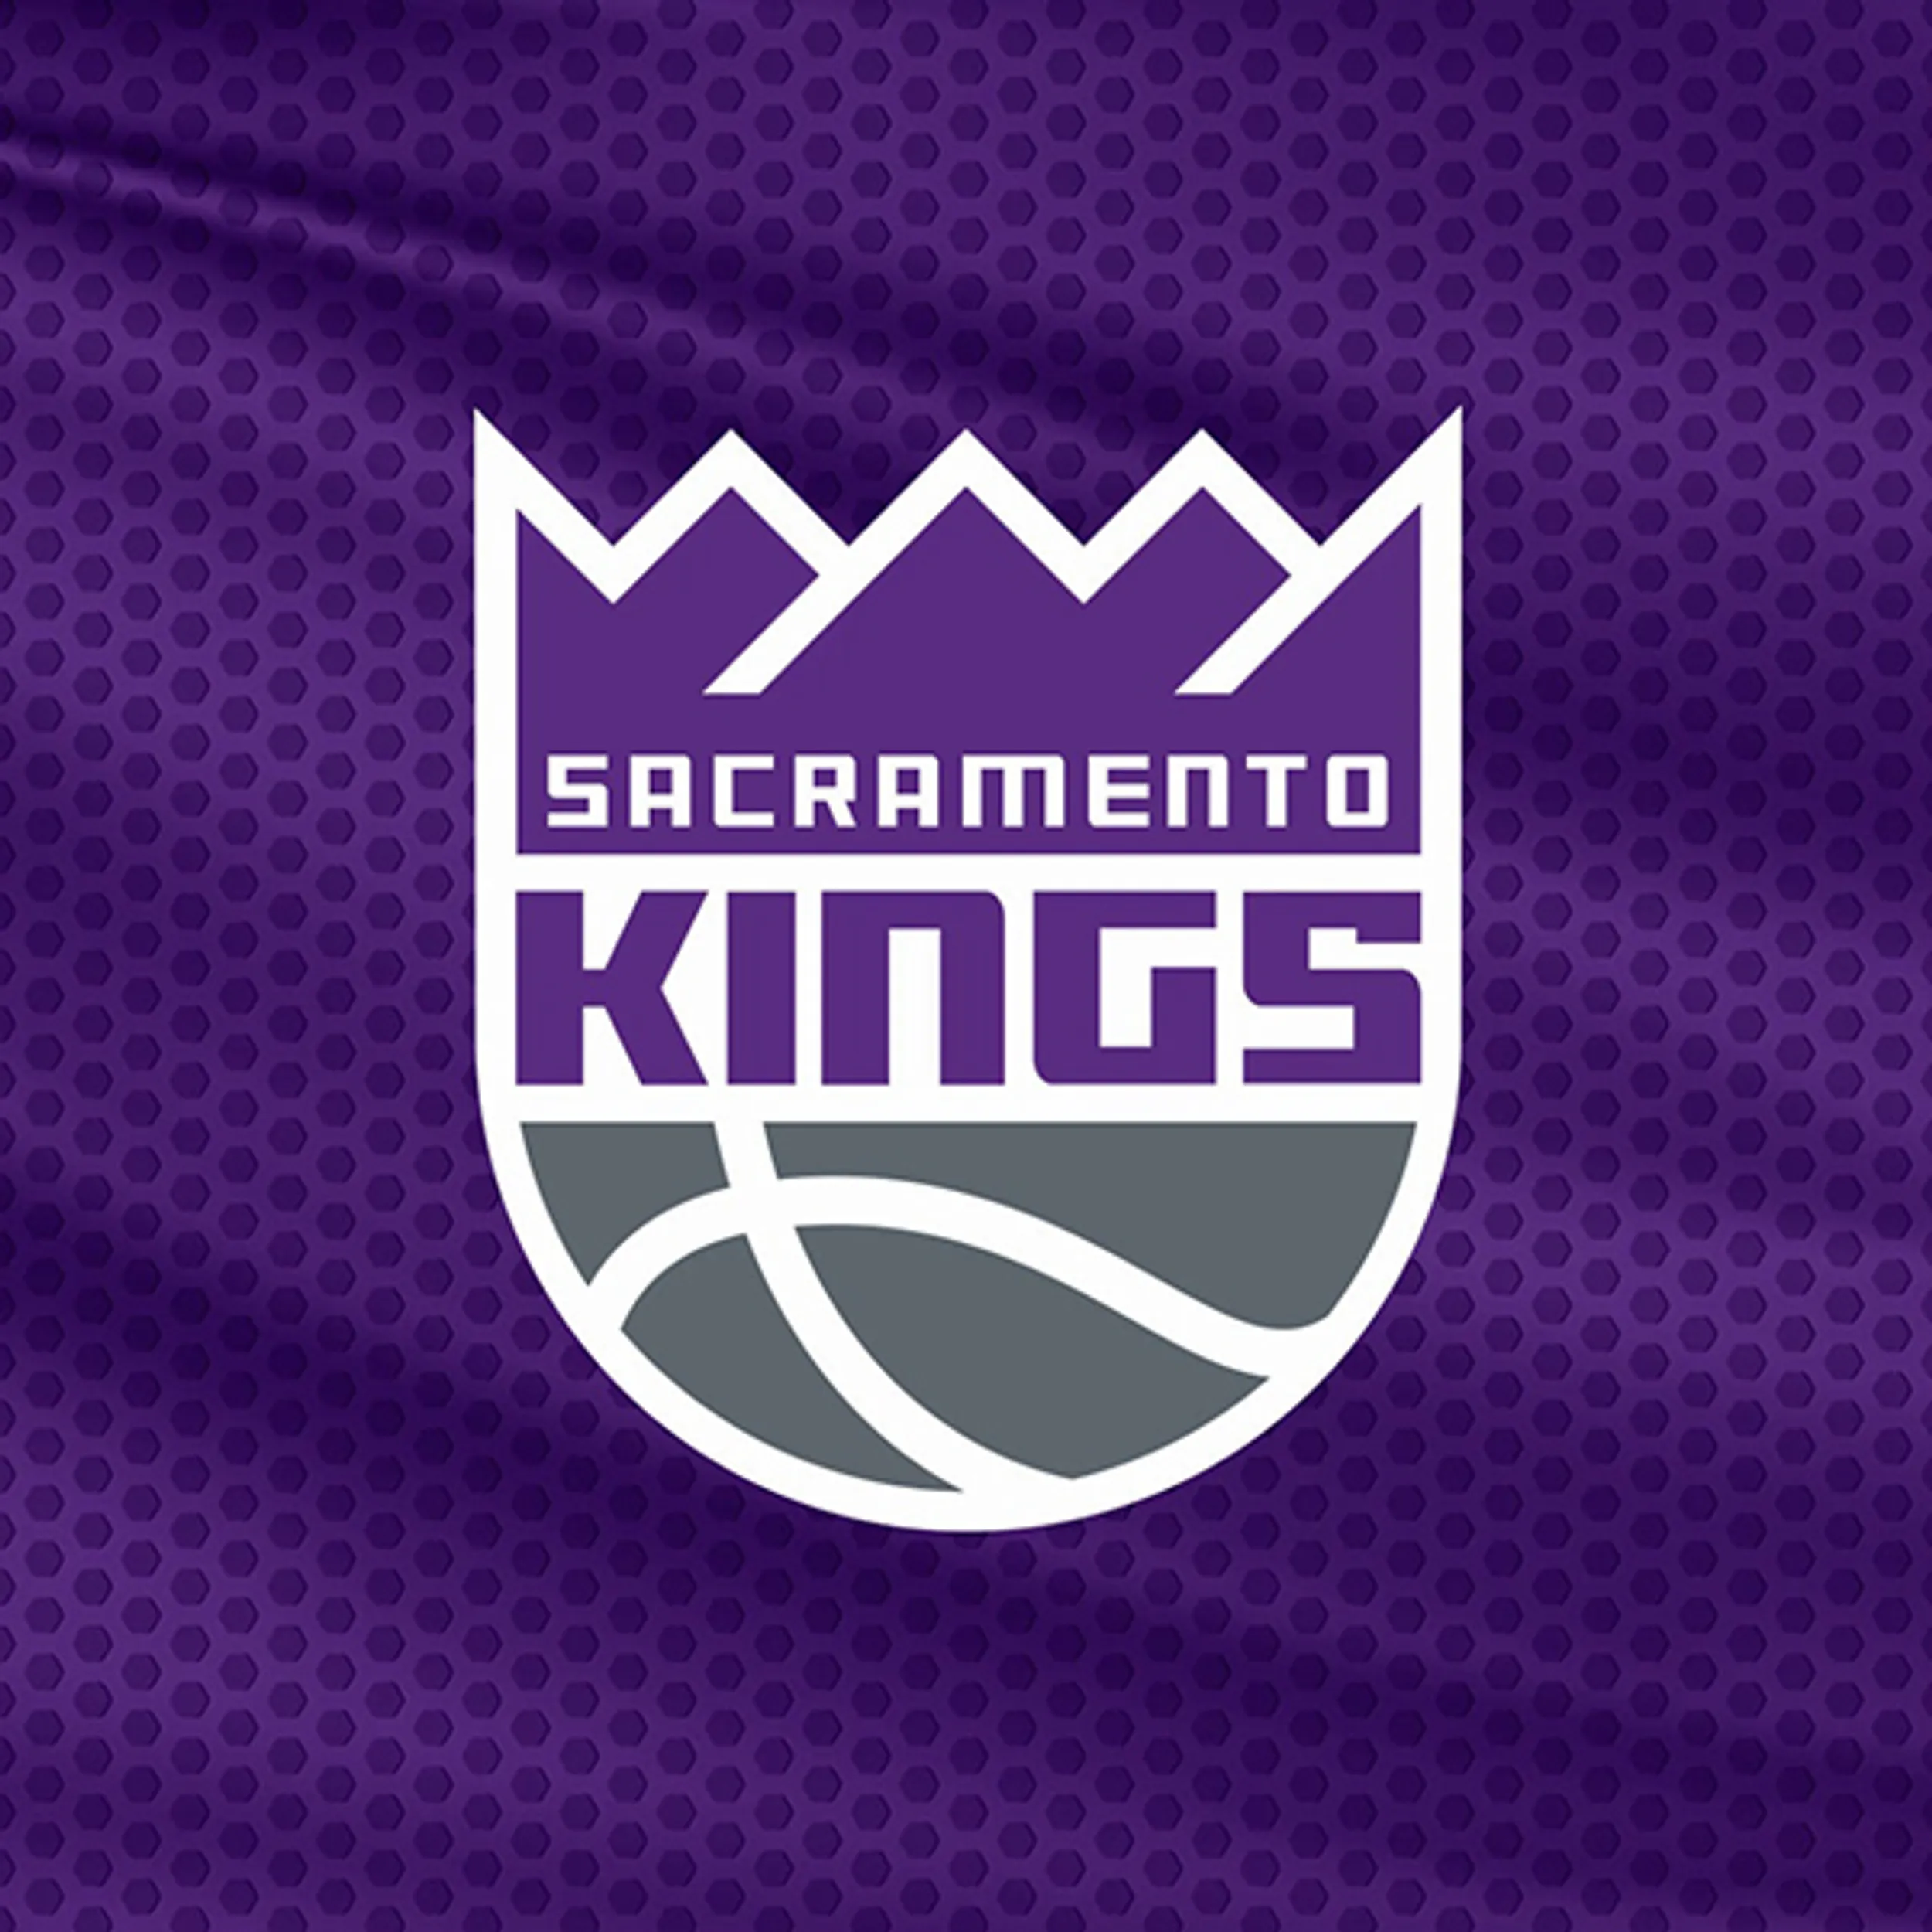 Sacramento kings logo